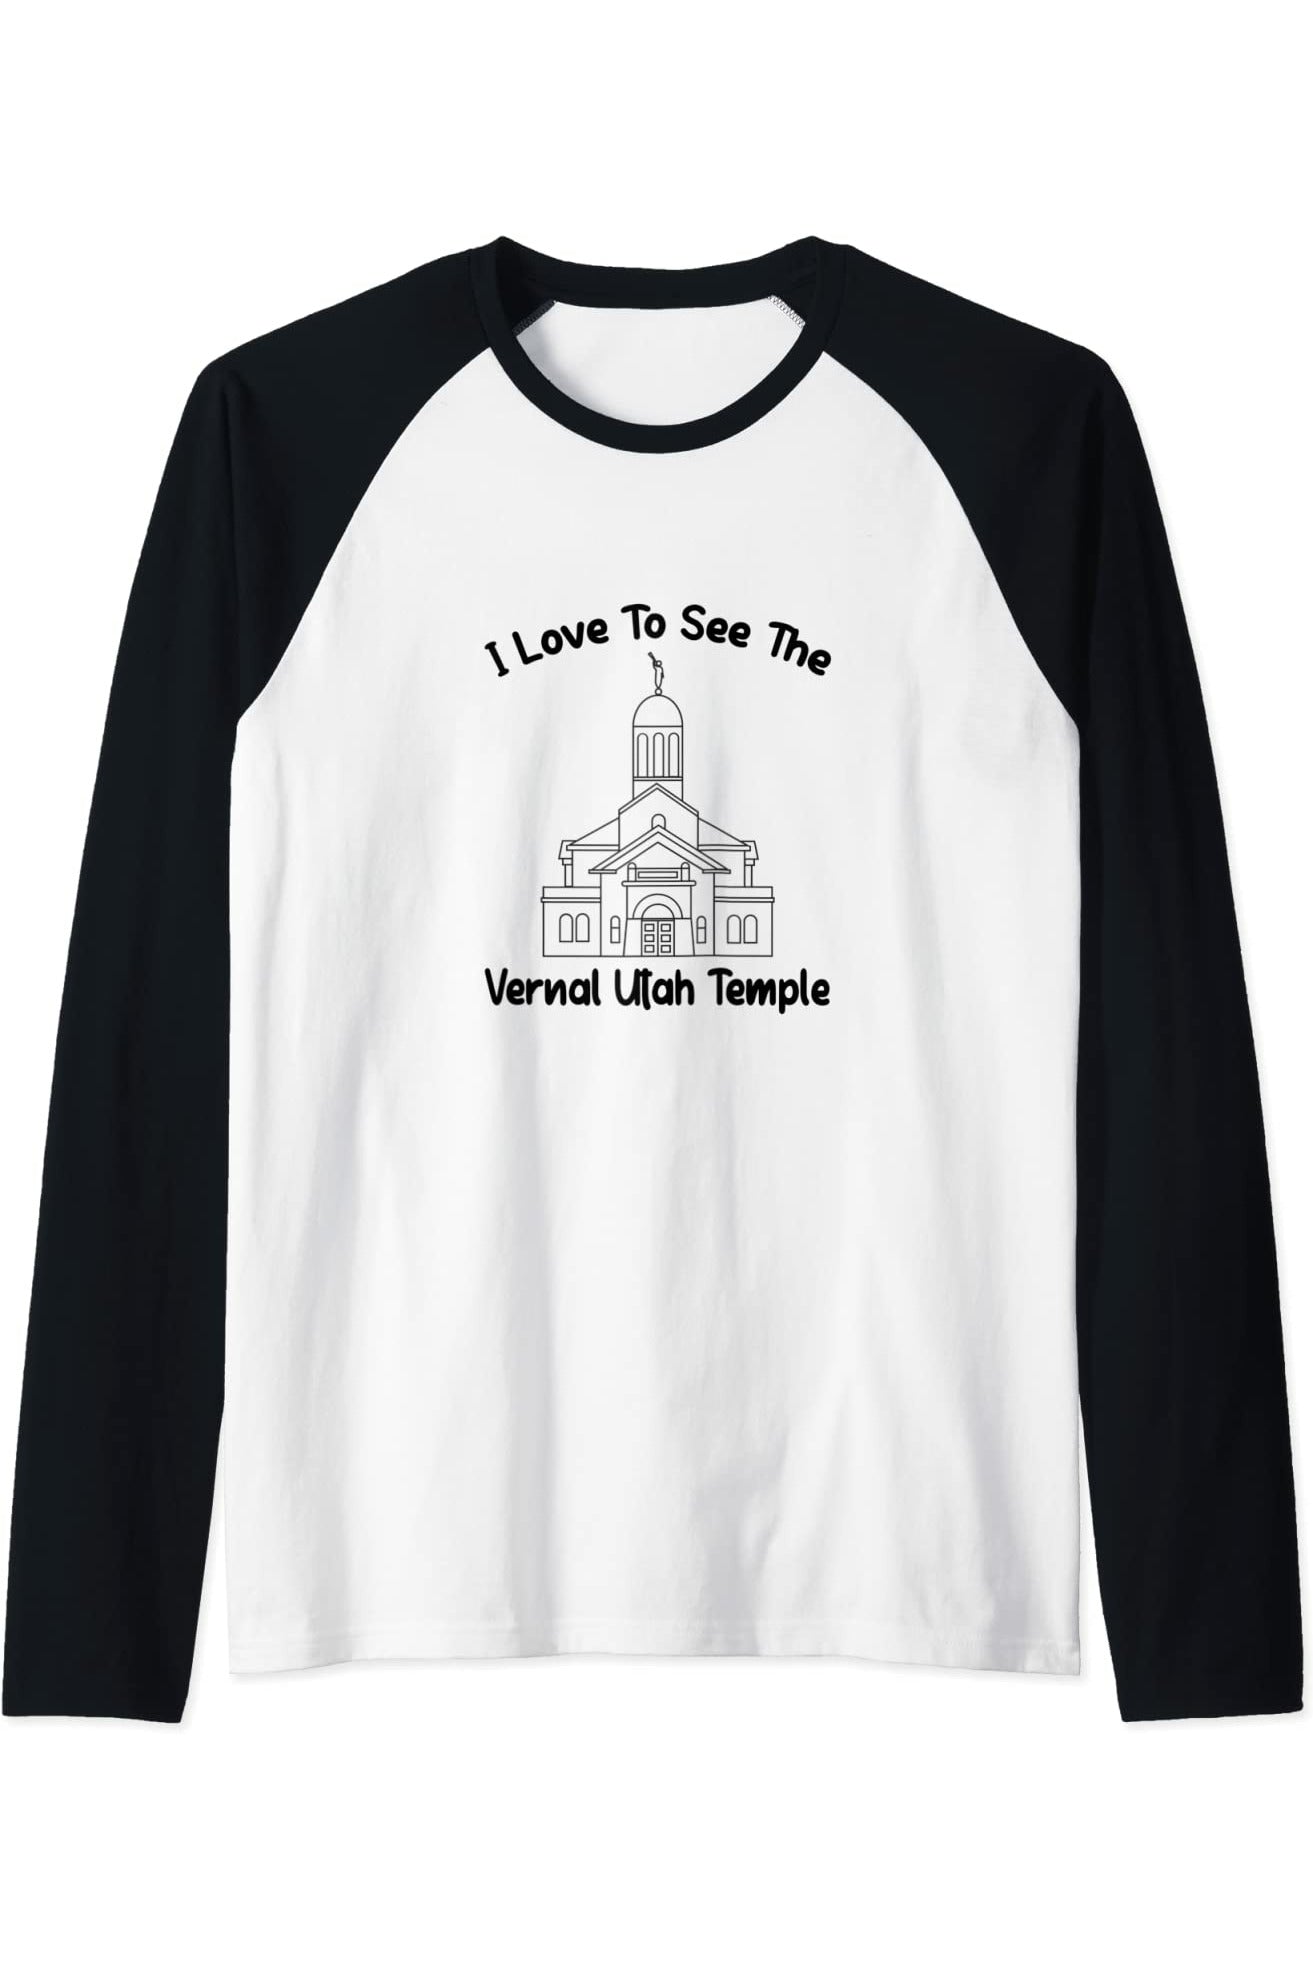 Vernal Utah Temple Raglan - Primary Style (English) US